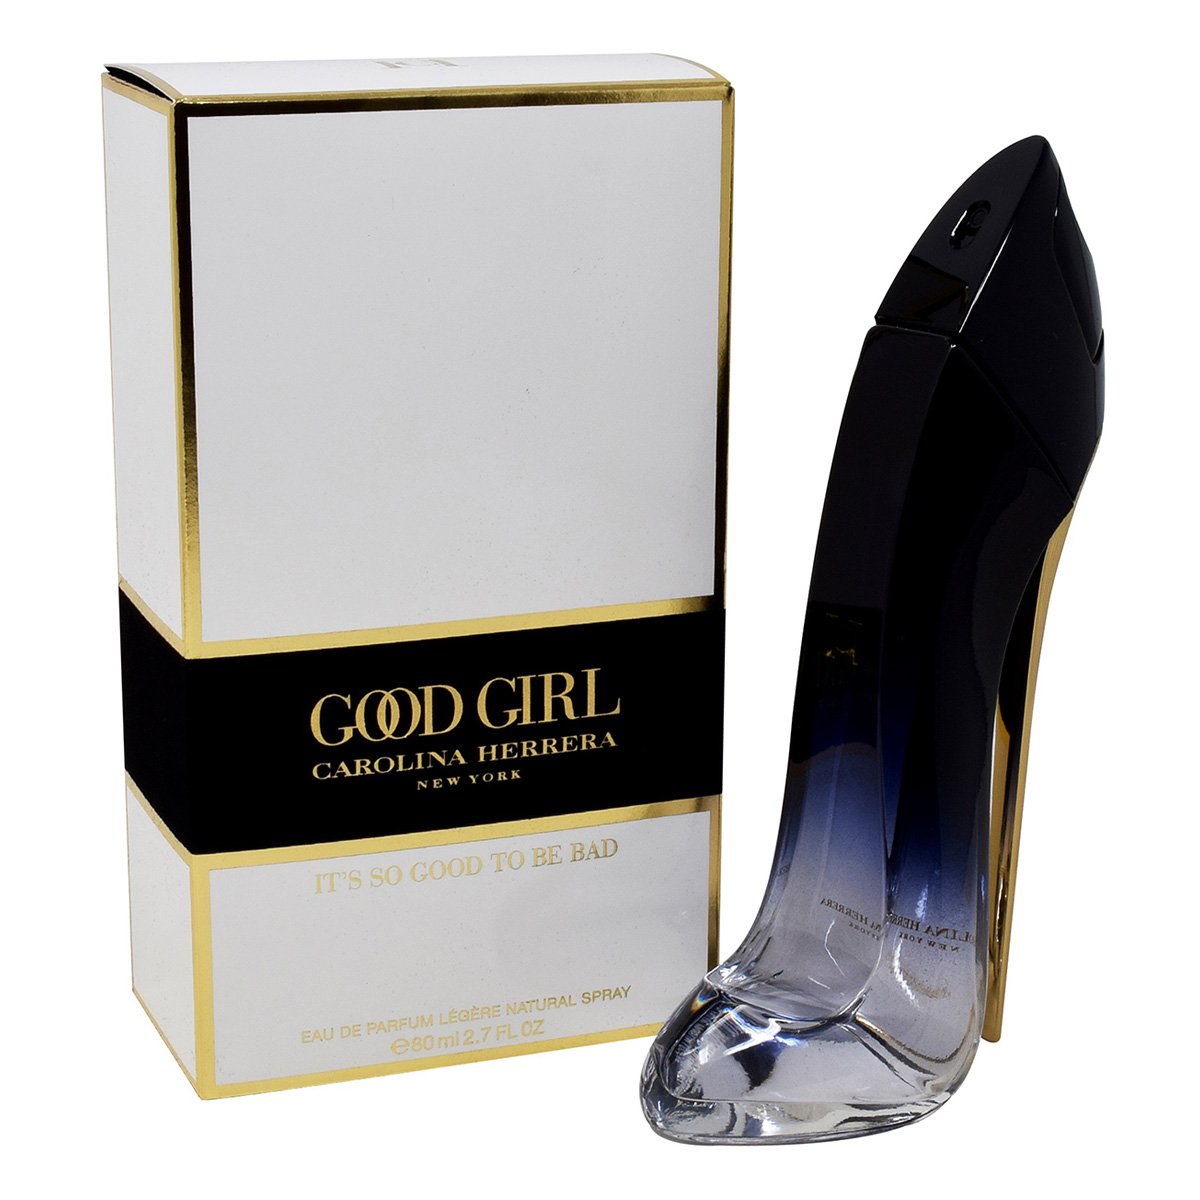 Chic Carolina Herrera 80ML EDP Mujer Perfume - Productos de Lujo